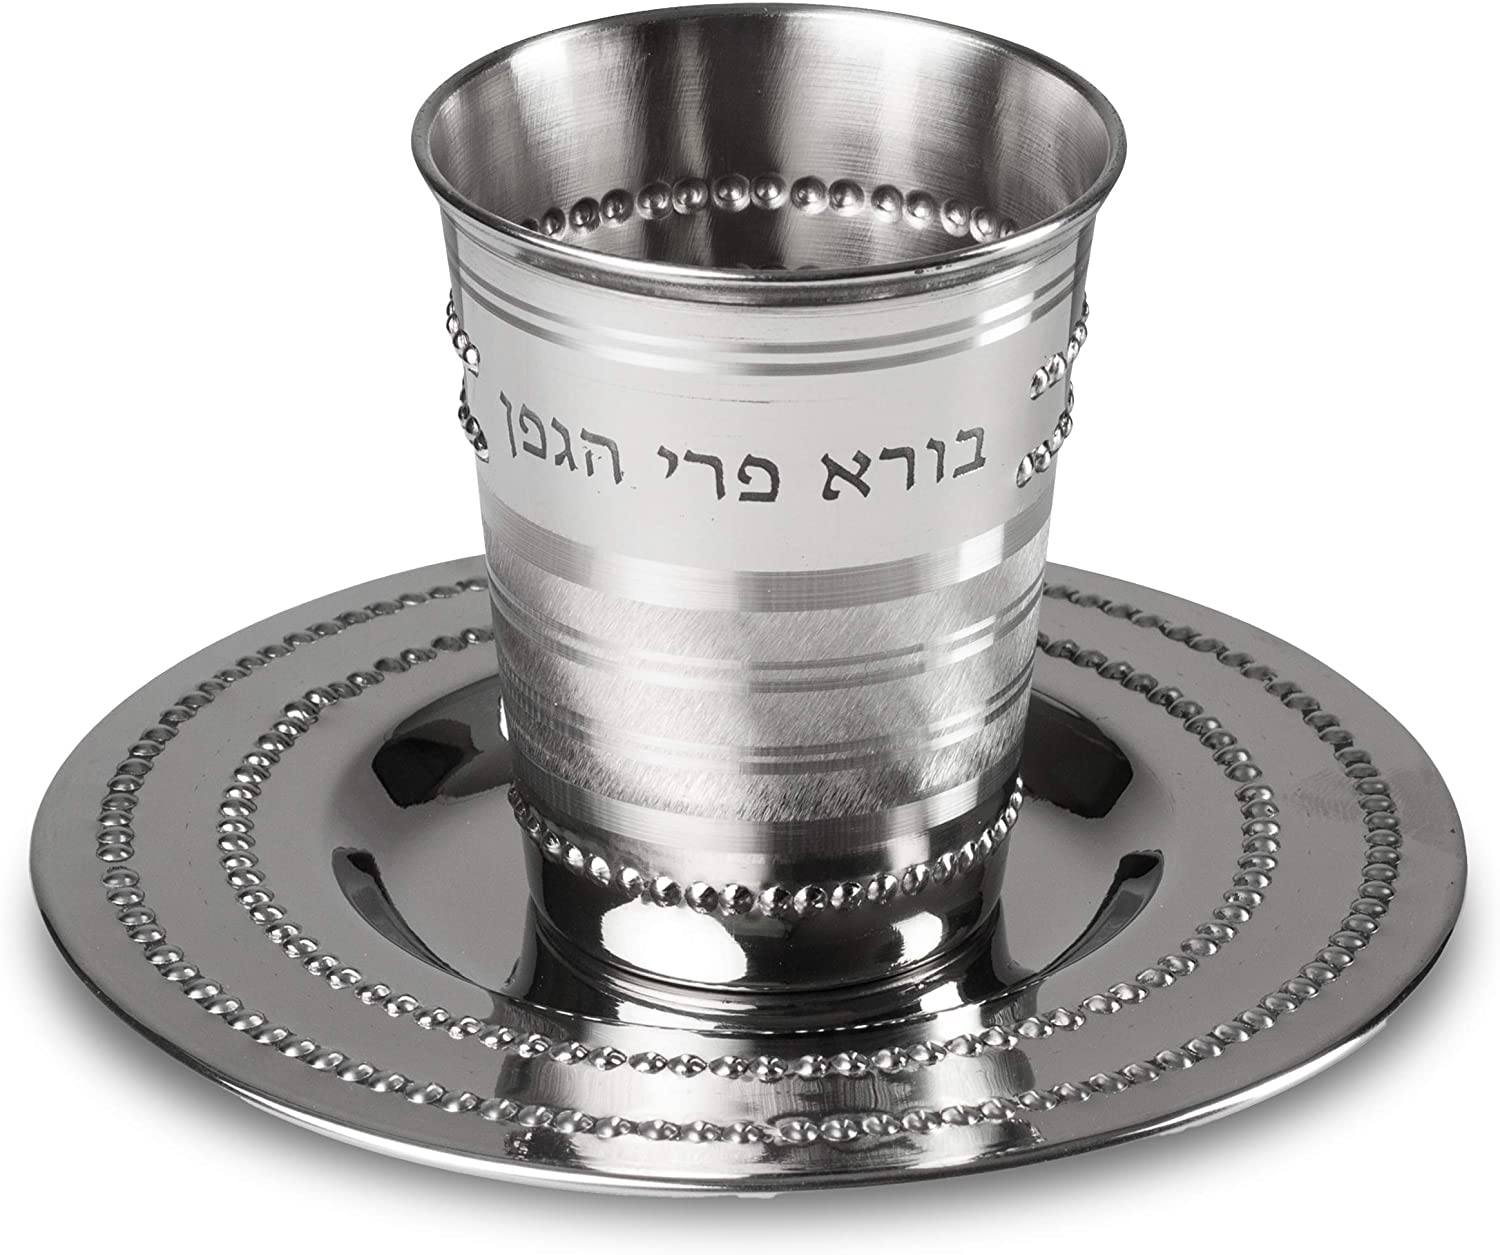 bar-mitzah-gifts-cup